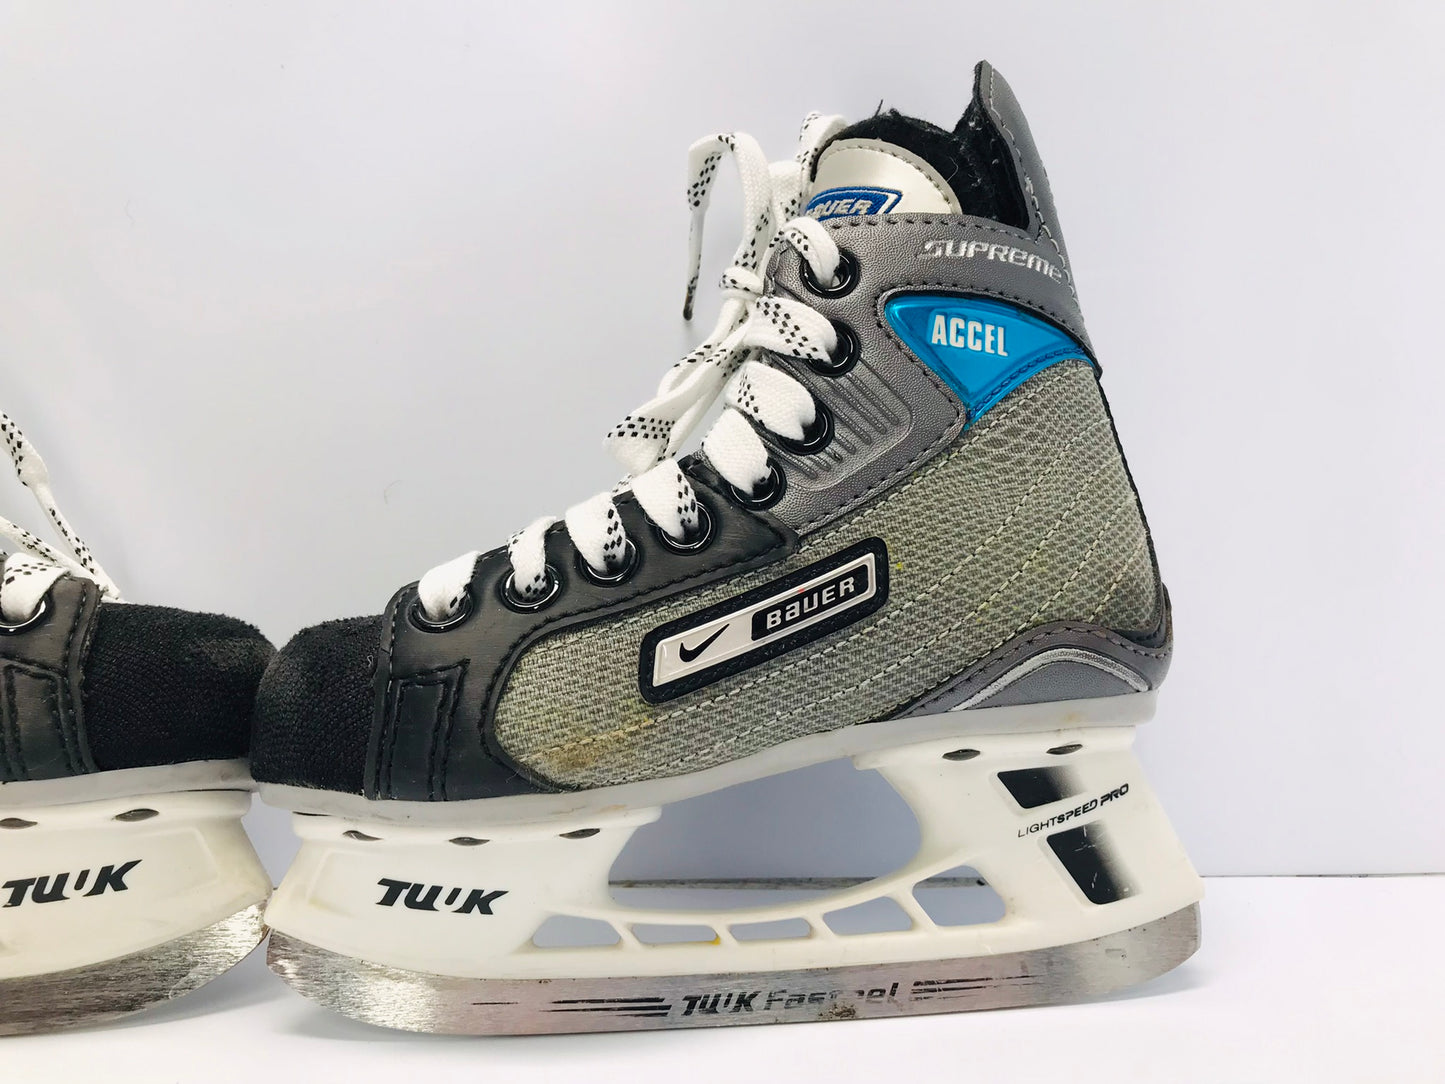 Hockey Skates Child Size 11 Shoe Size Bauer Supreme Excellent